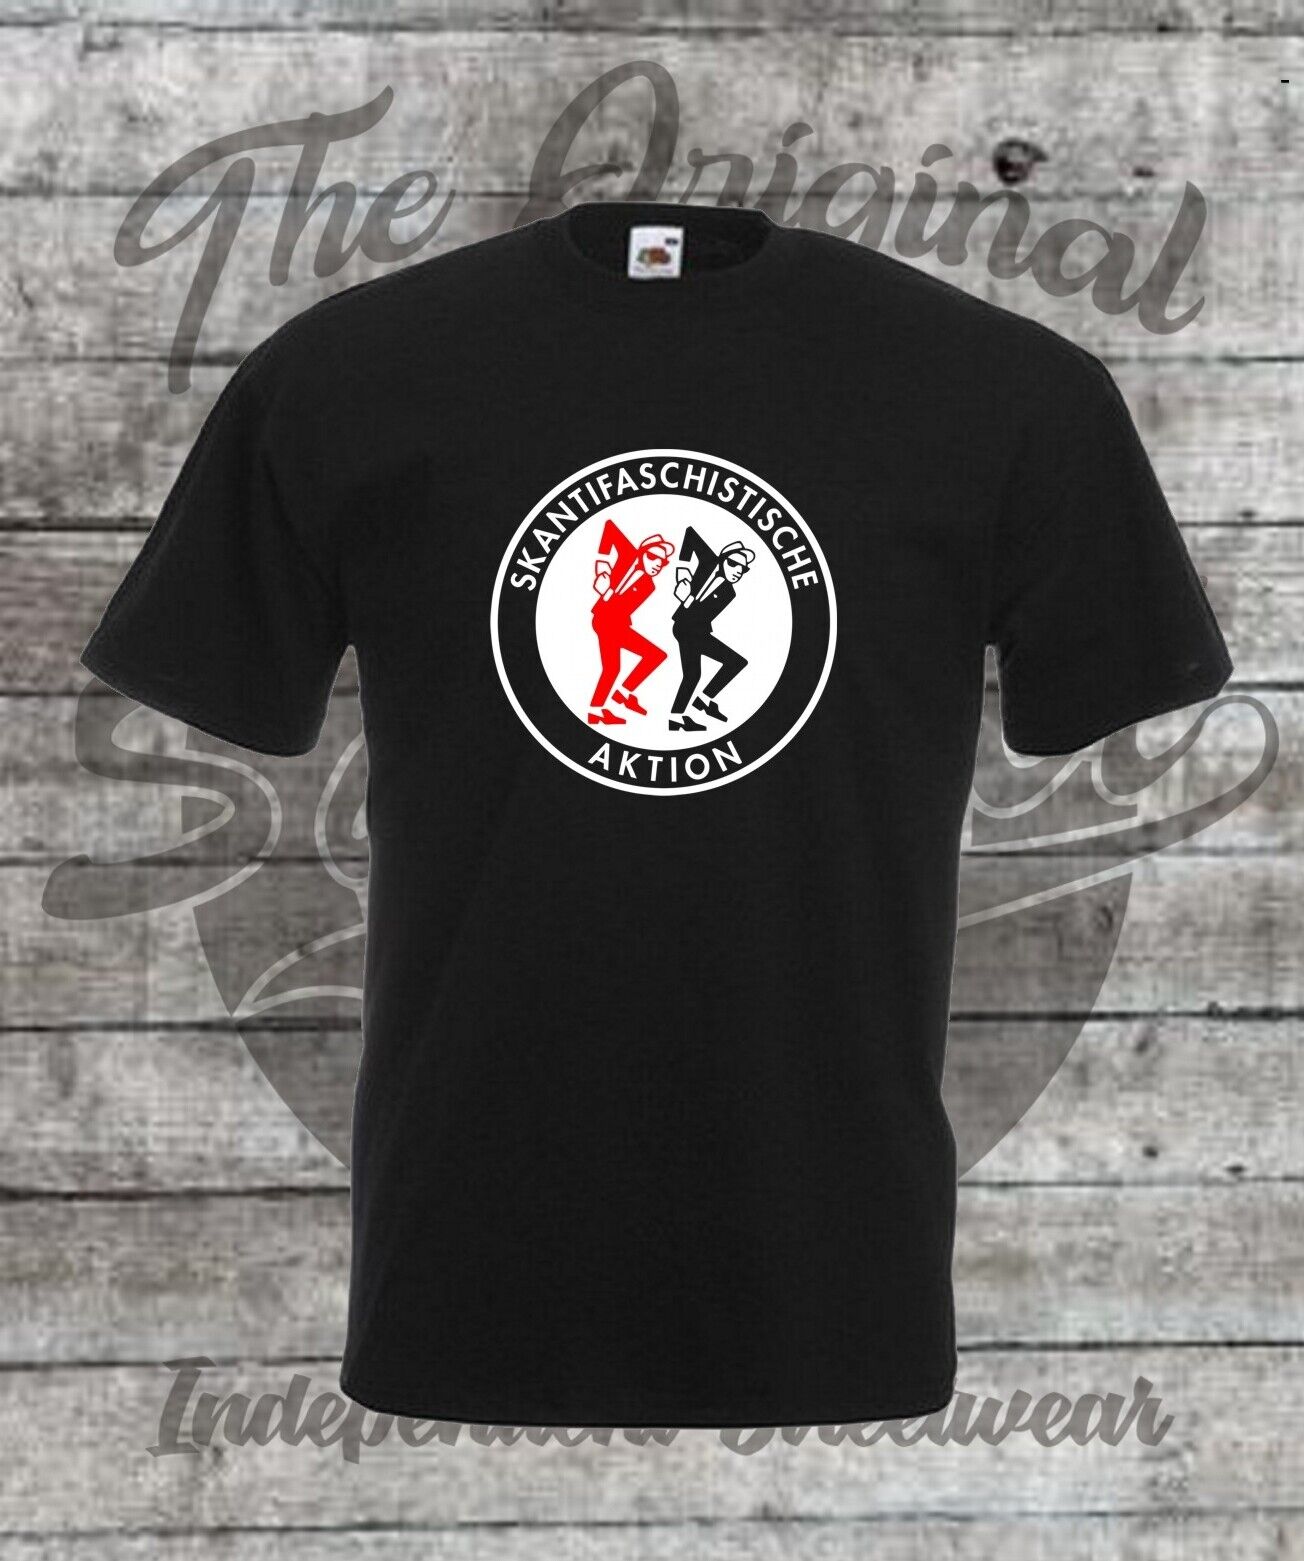 T-Shirt Größe S - 4XL SKA / Antifa / Gegen Nazis / FCK NZS / Antifaschist / Punk